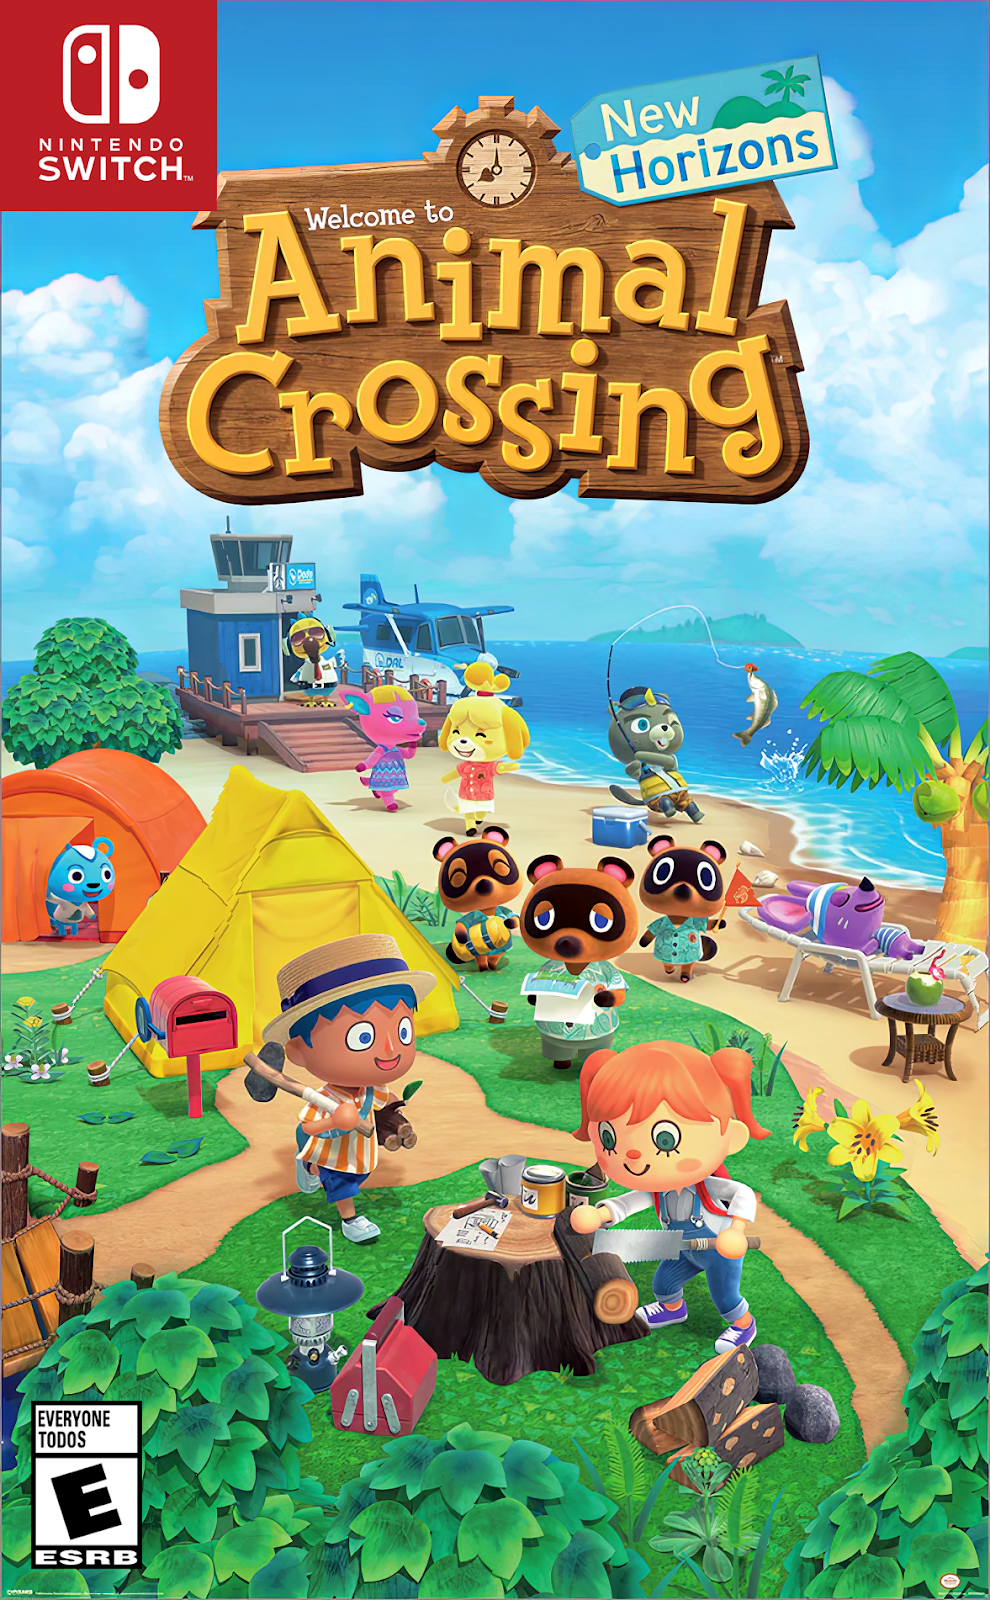 Animal Crossing: New Horizons - Cover Art